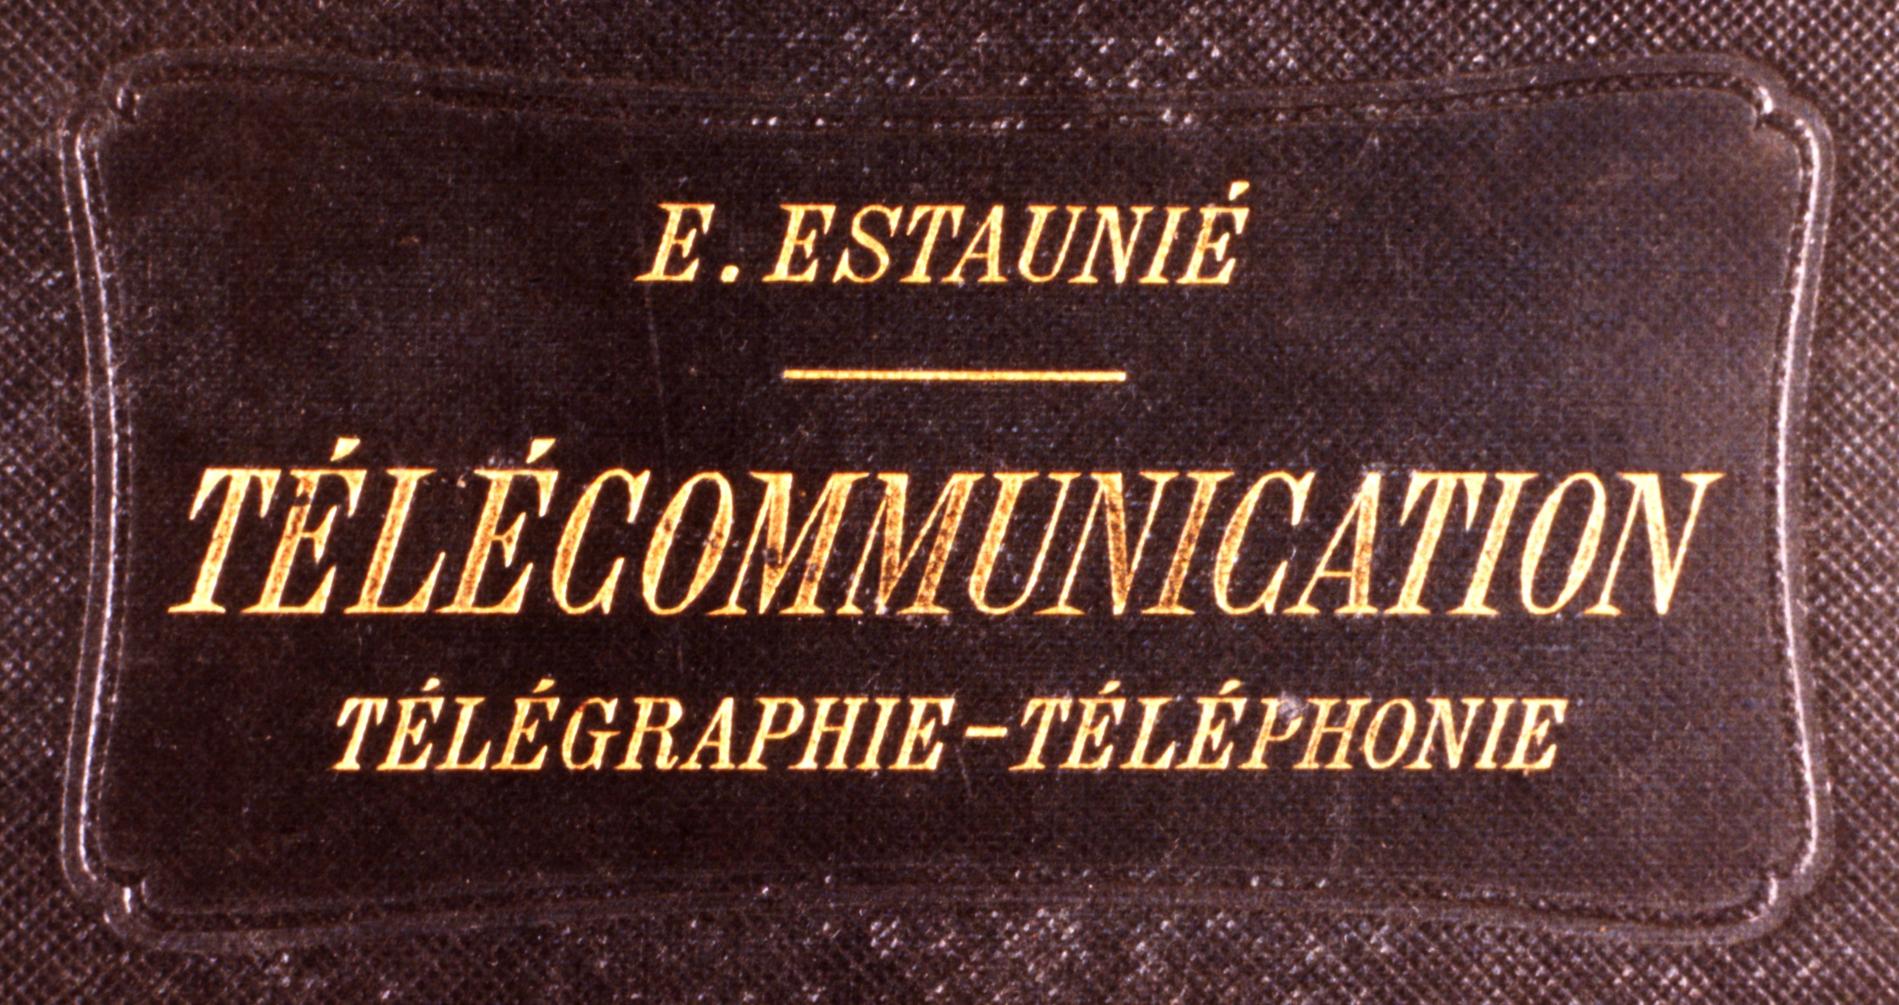 1903LivreEstaunieTelecommunication